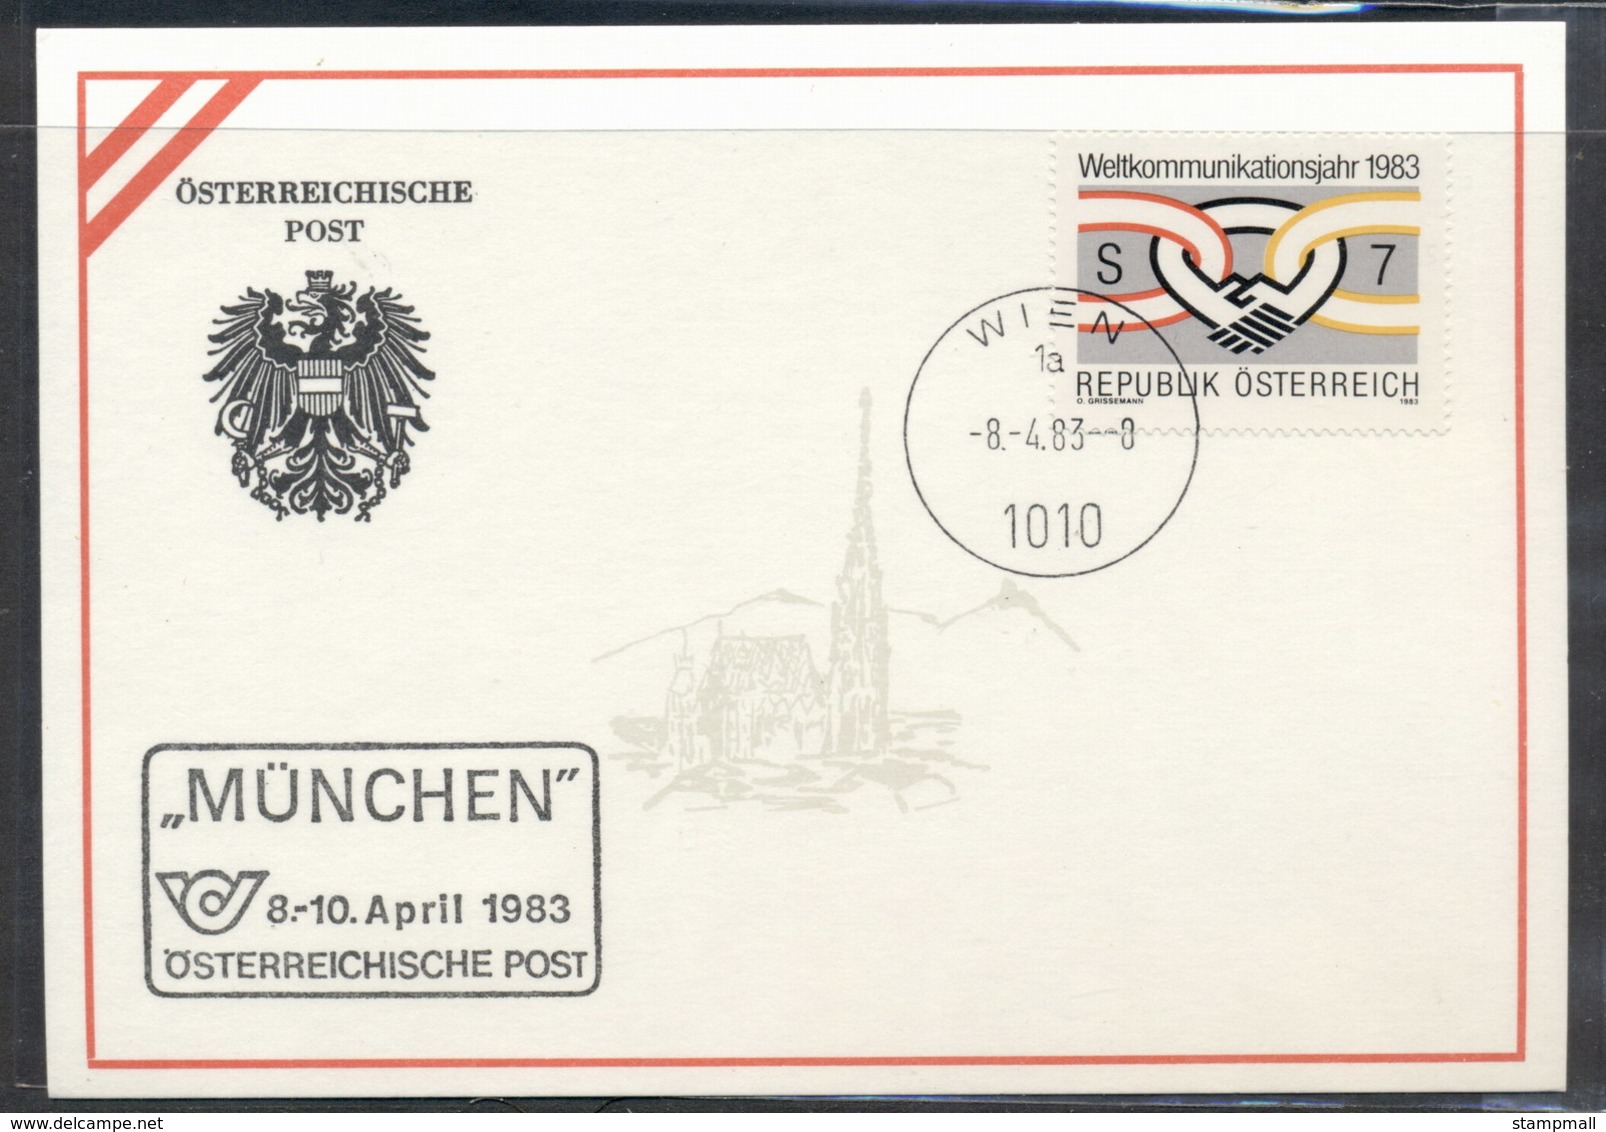 Austria 1983 World Communications Year, Munchen Souvenir Card - FDC